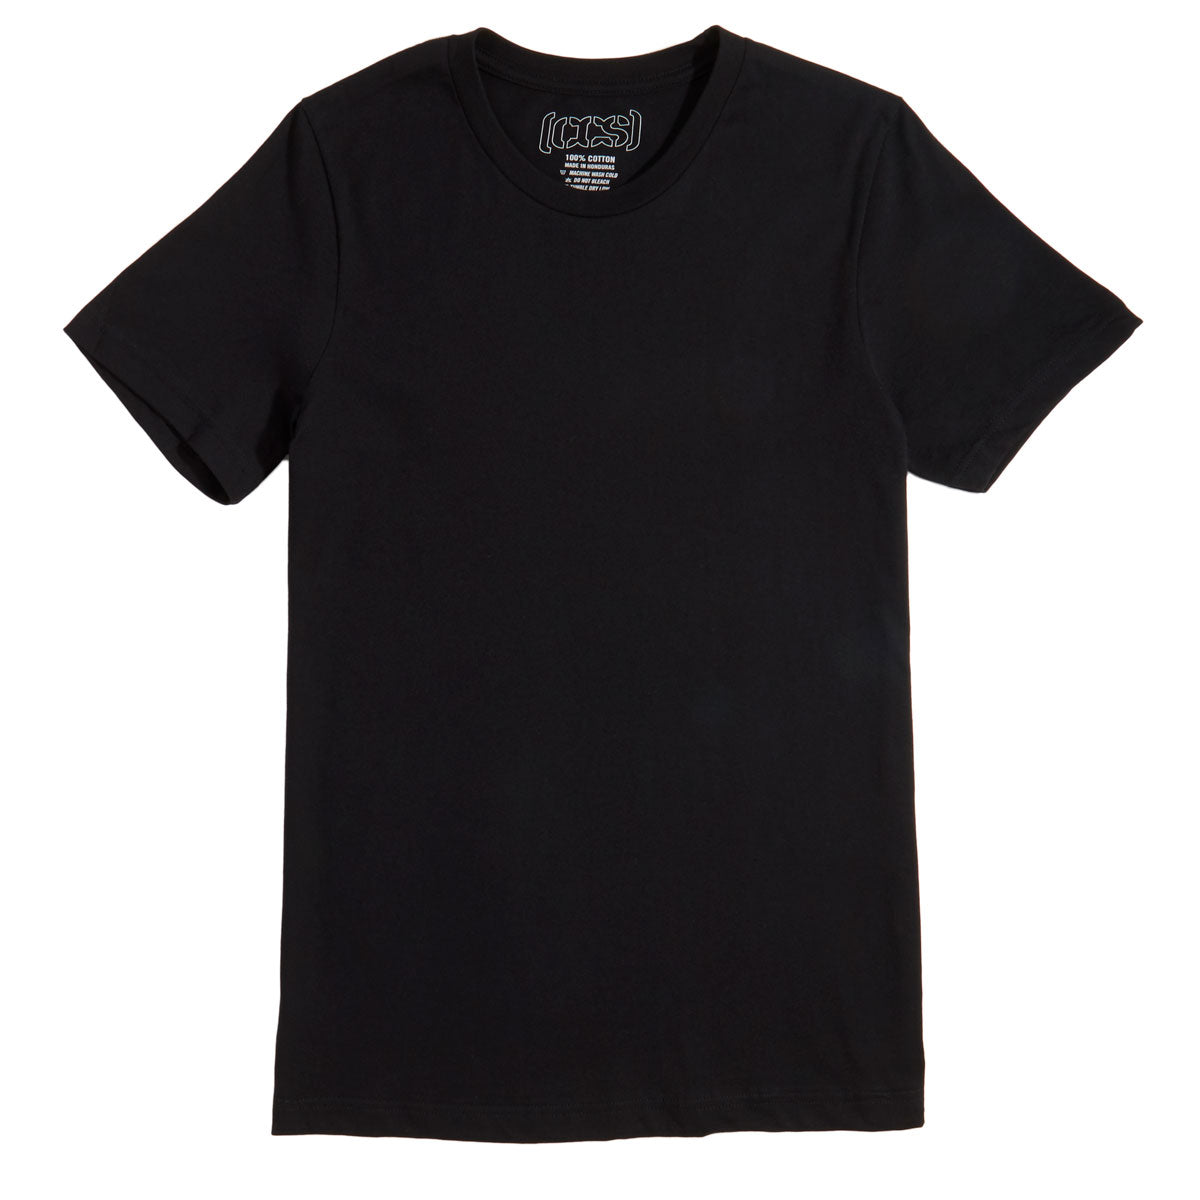 CCS Basis T-Shirt - Black image 1